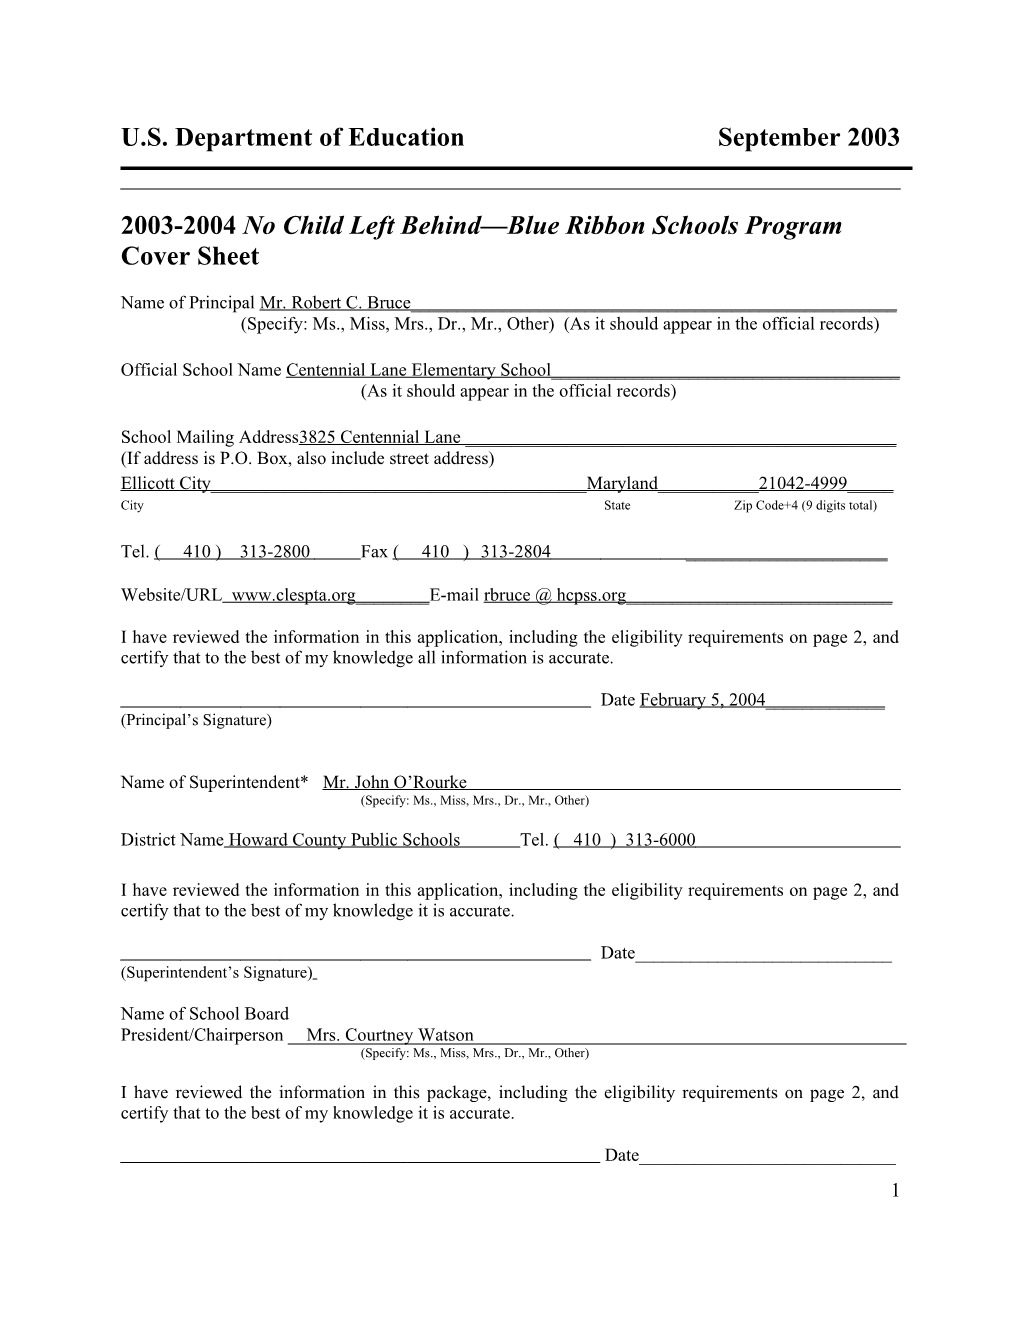 Centennial Lane Elementary School 2004 No Child Left Behind-Blue Ribbon School Application